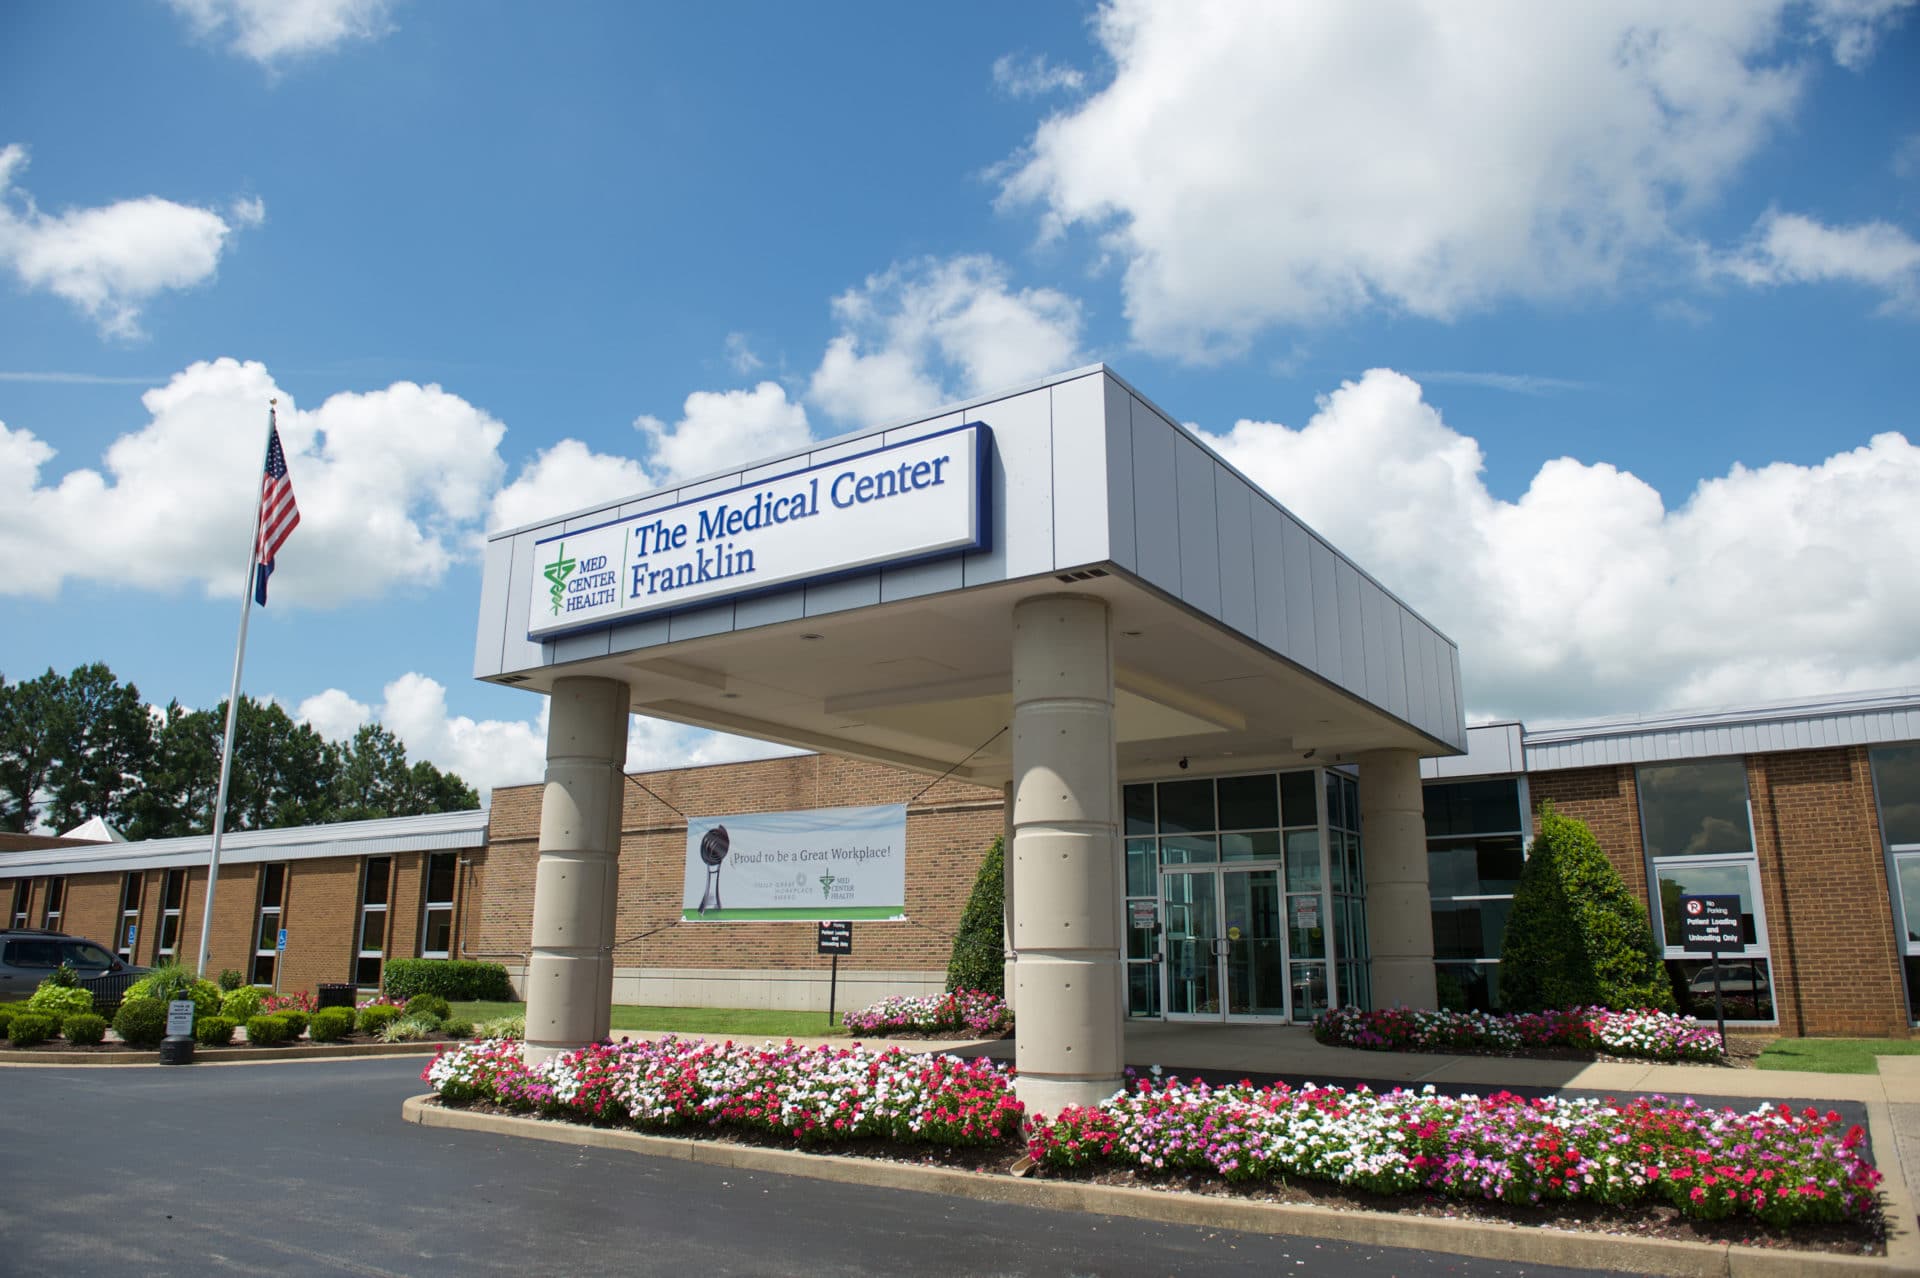 The Medical Center at Franklin